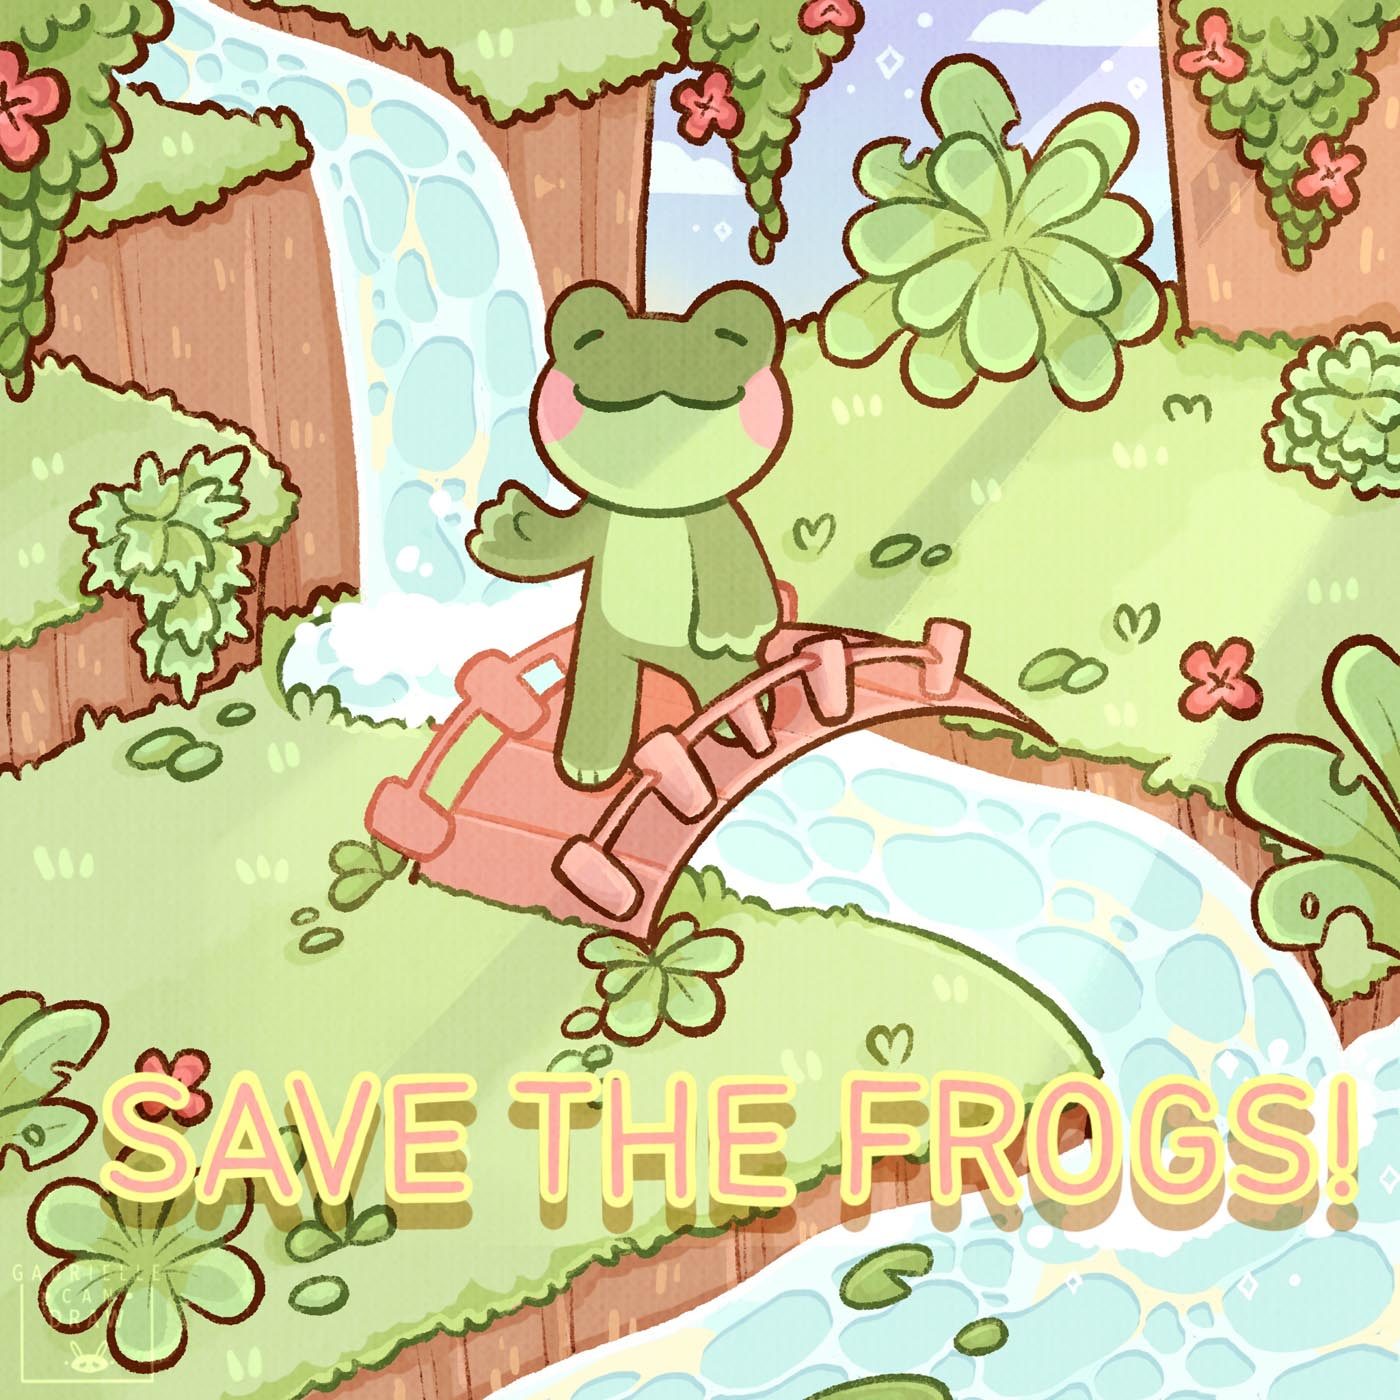 Габриэль-Галарно-Канада-2021-save-the-frogs-art-contest 4-е место Победитель